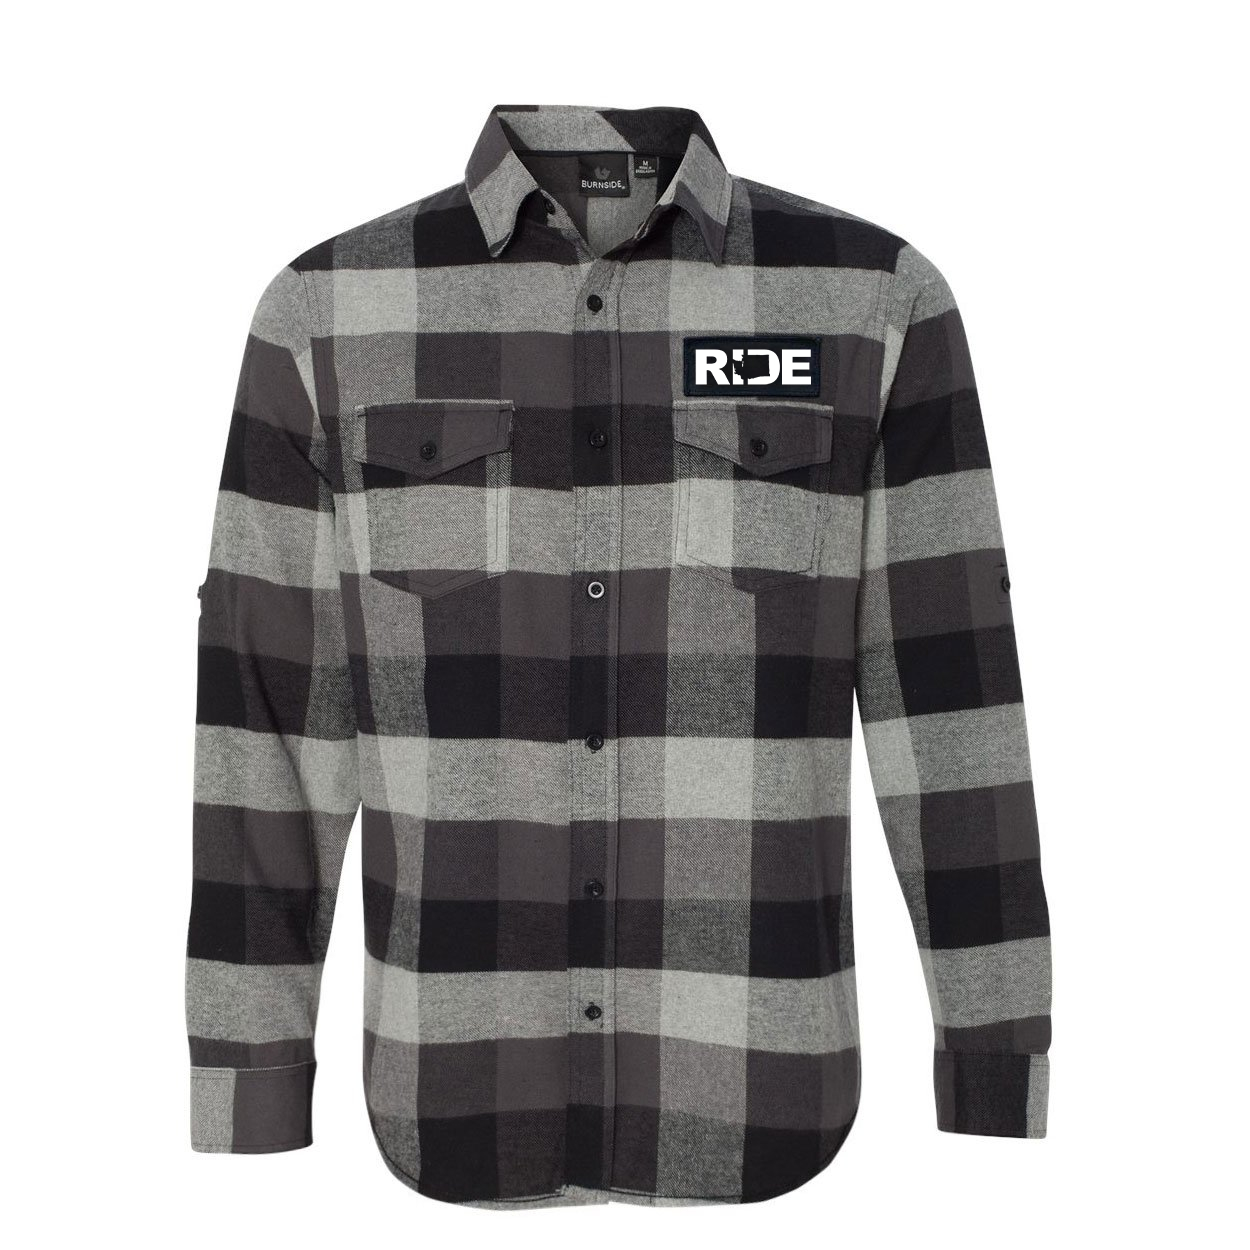 Ride Washington Classic Unisex Long Sleeve Woven Patch Flannel Shirt Black/Gray (White Logo)